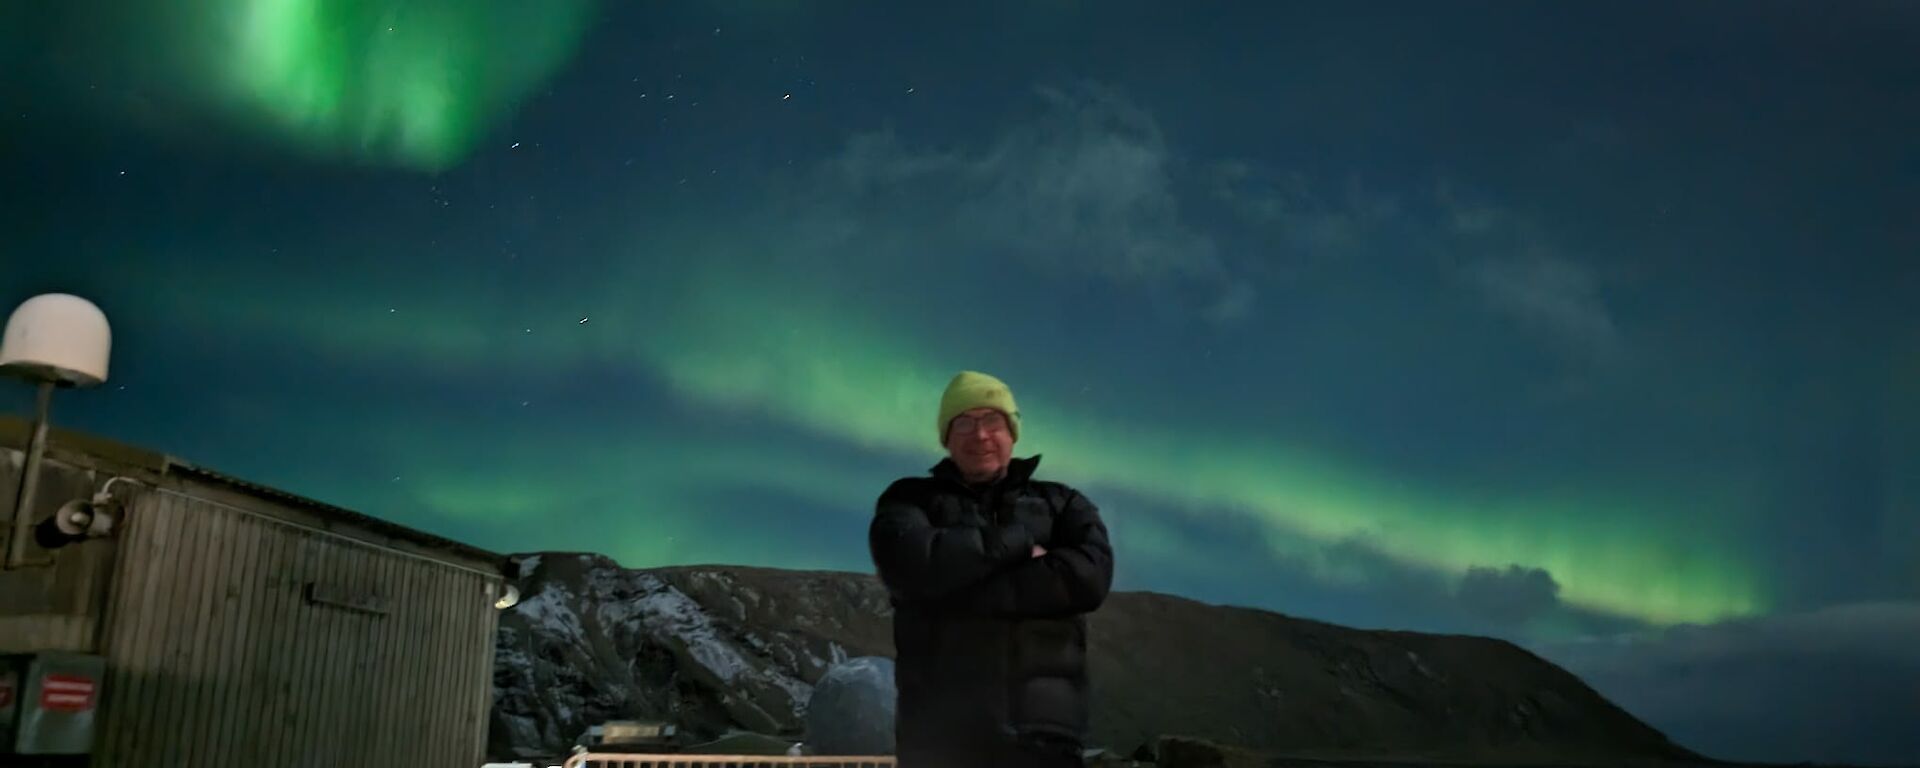 2023 winter plumber Wayne Phillips standing underneath an aurora - Macquarie Island.